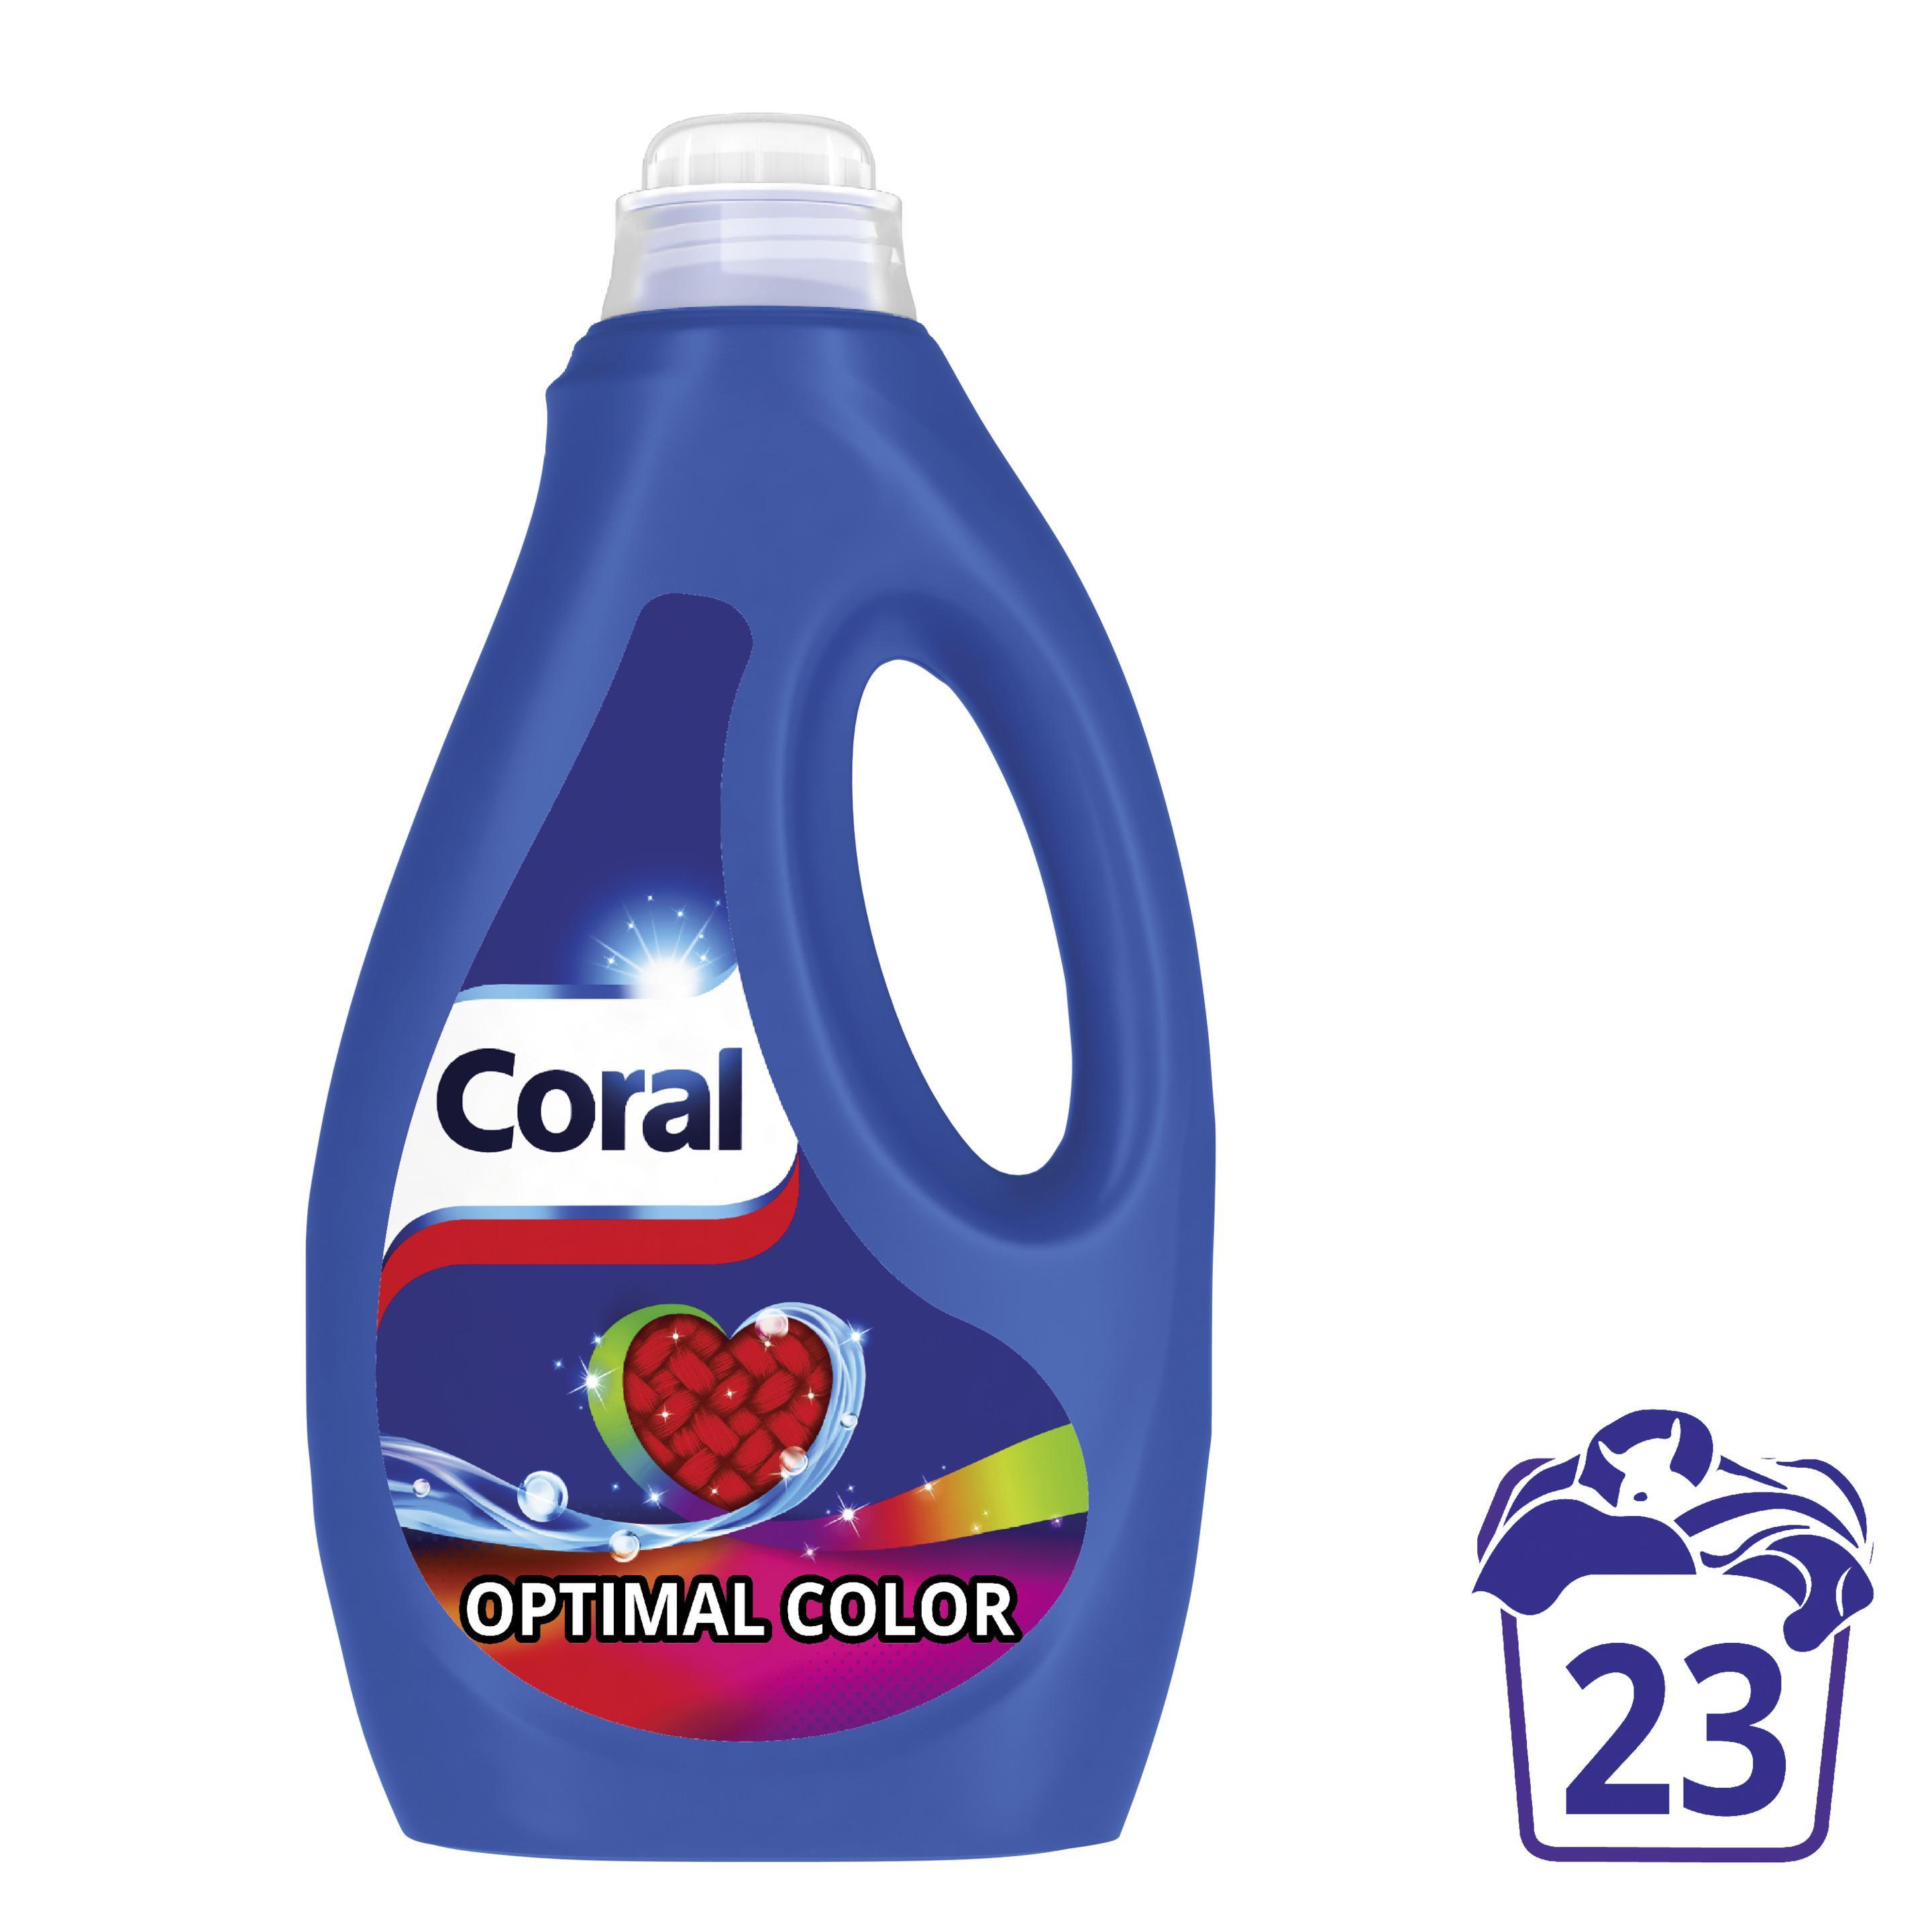 Coral Flüssigwaschmittel Optimal Color 23WL